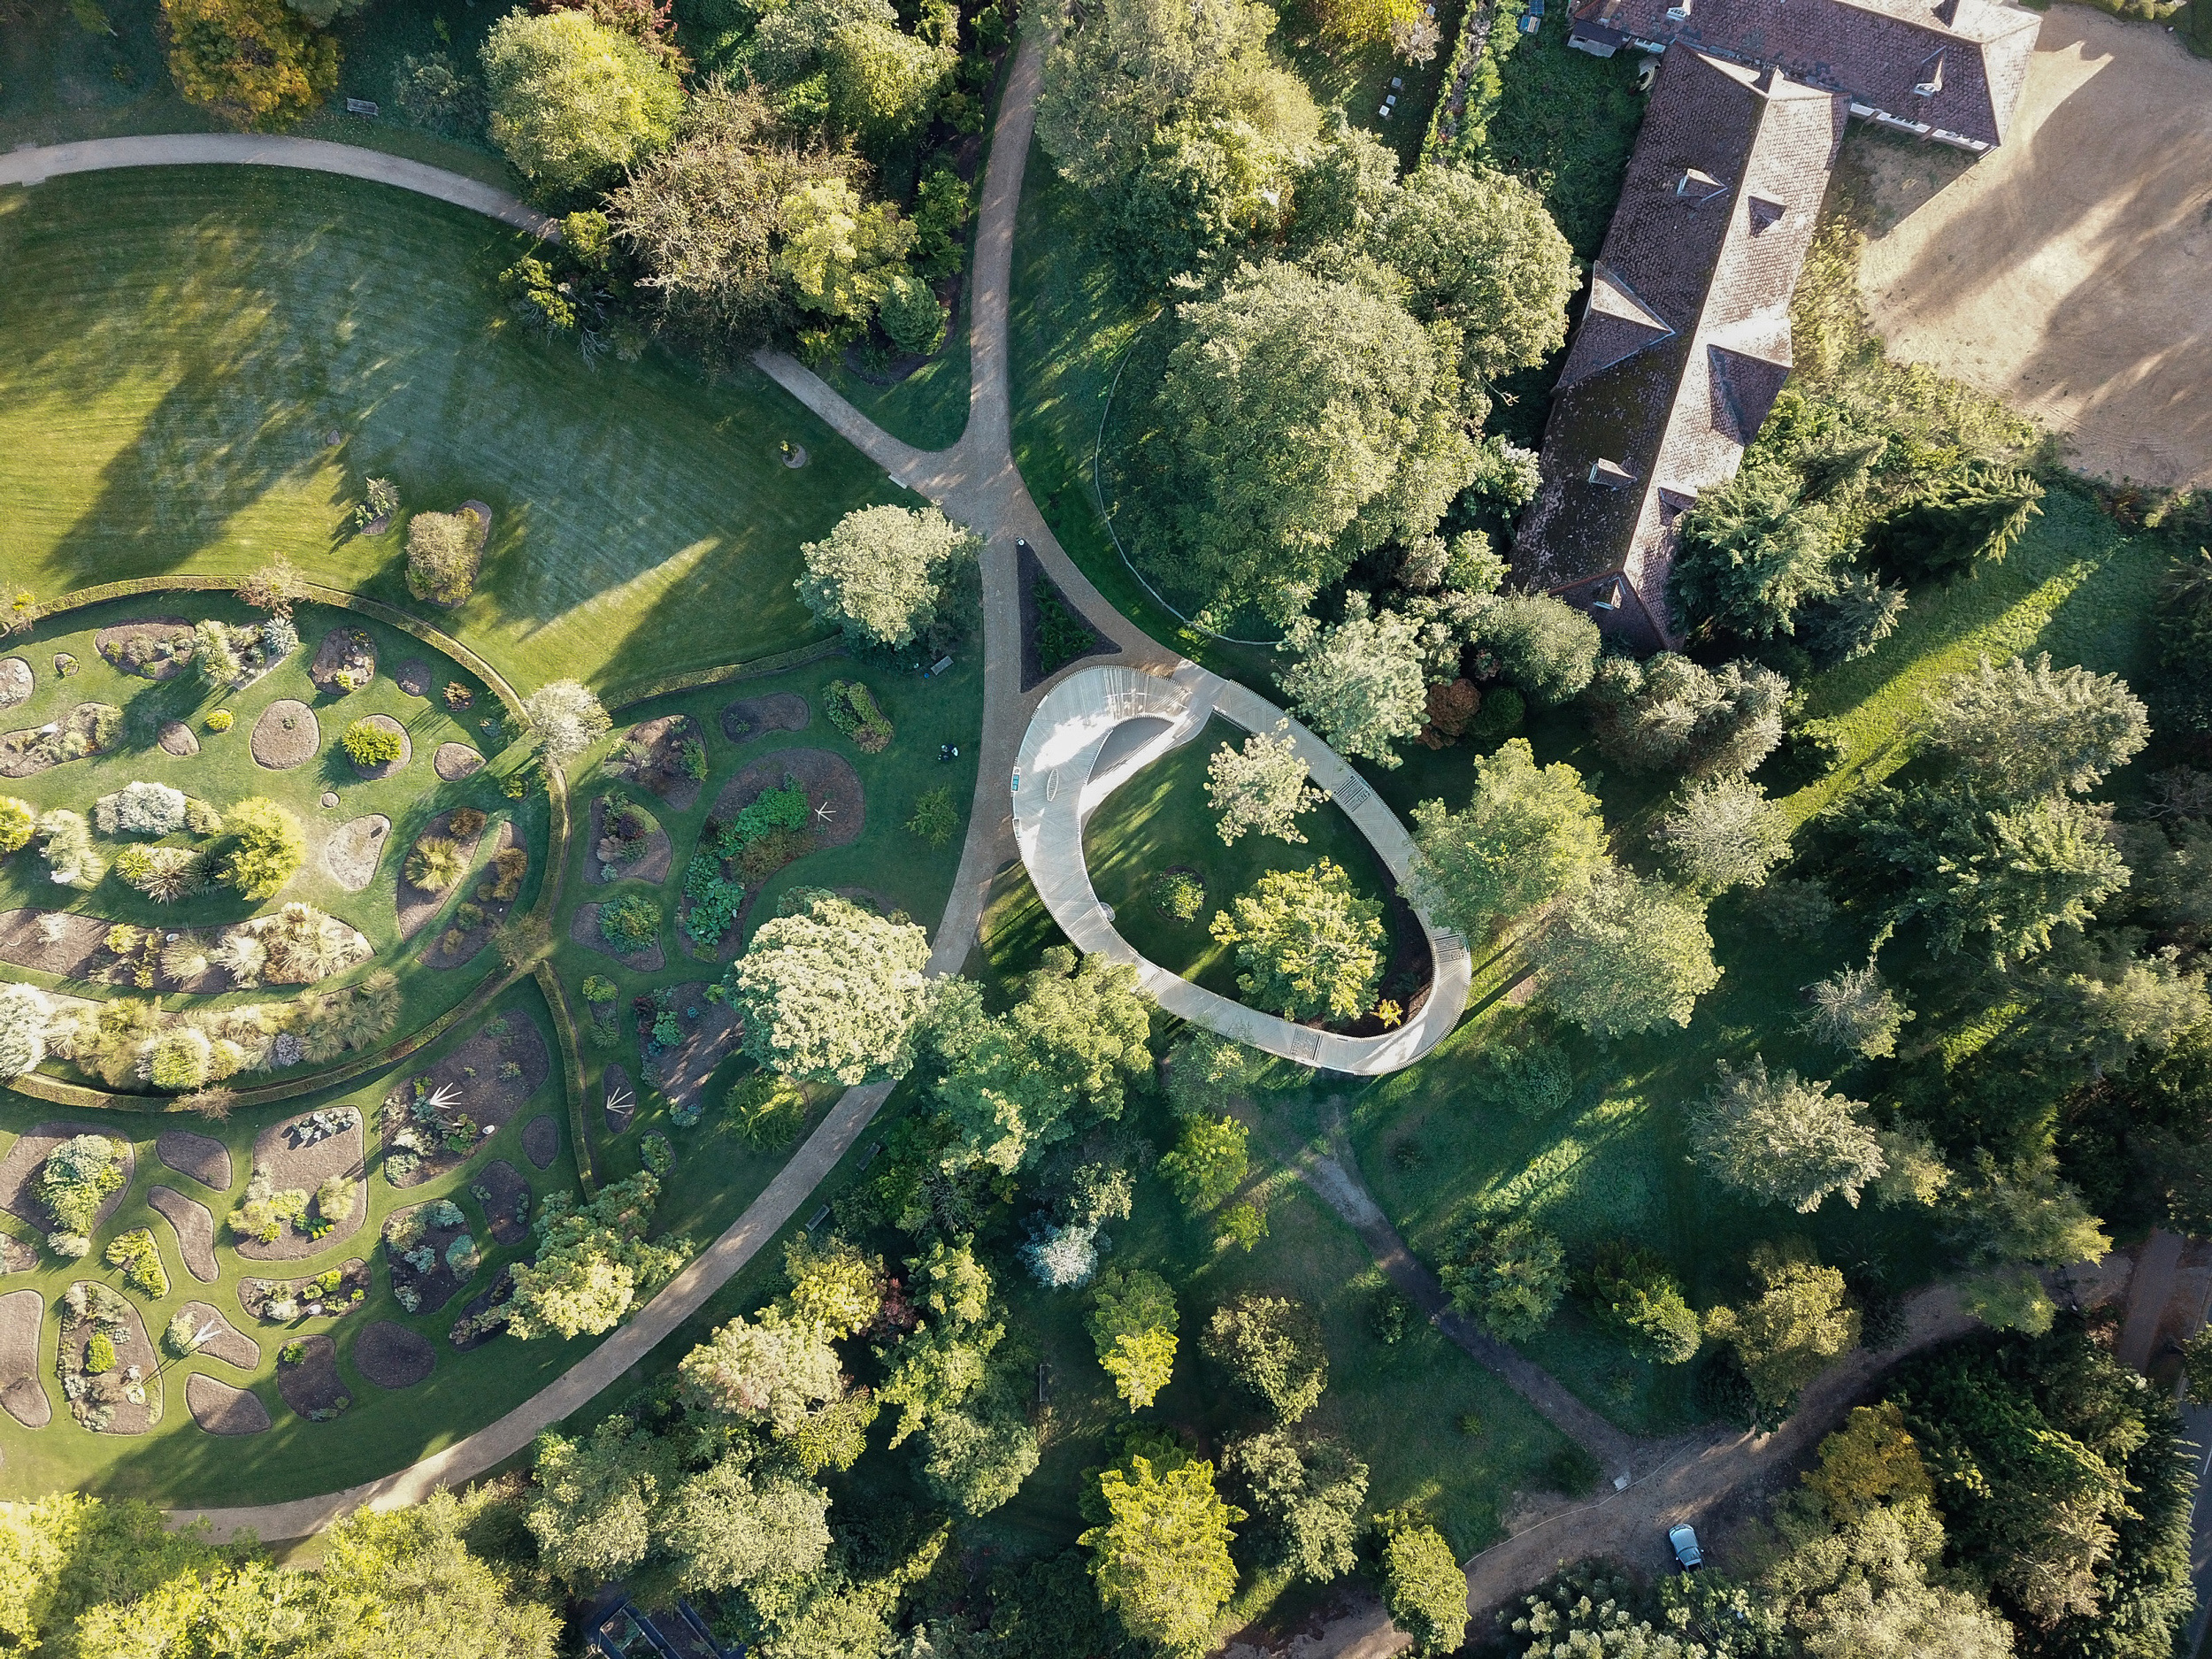 Aerial view of The Rising Path, Cambridge University Botanic Garden by Cambridge architects CDC Studio